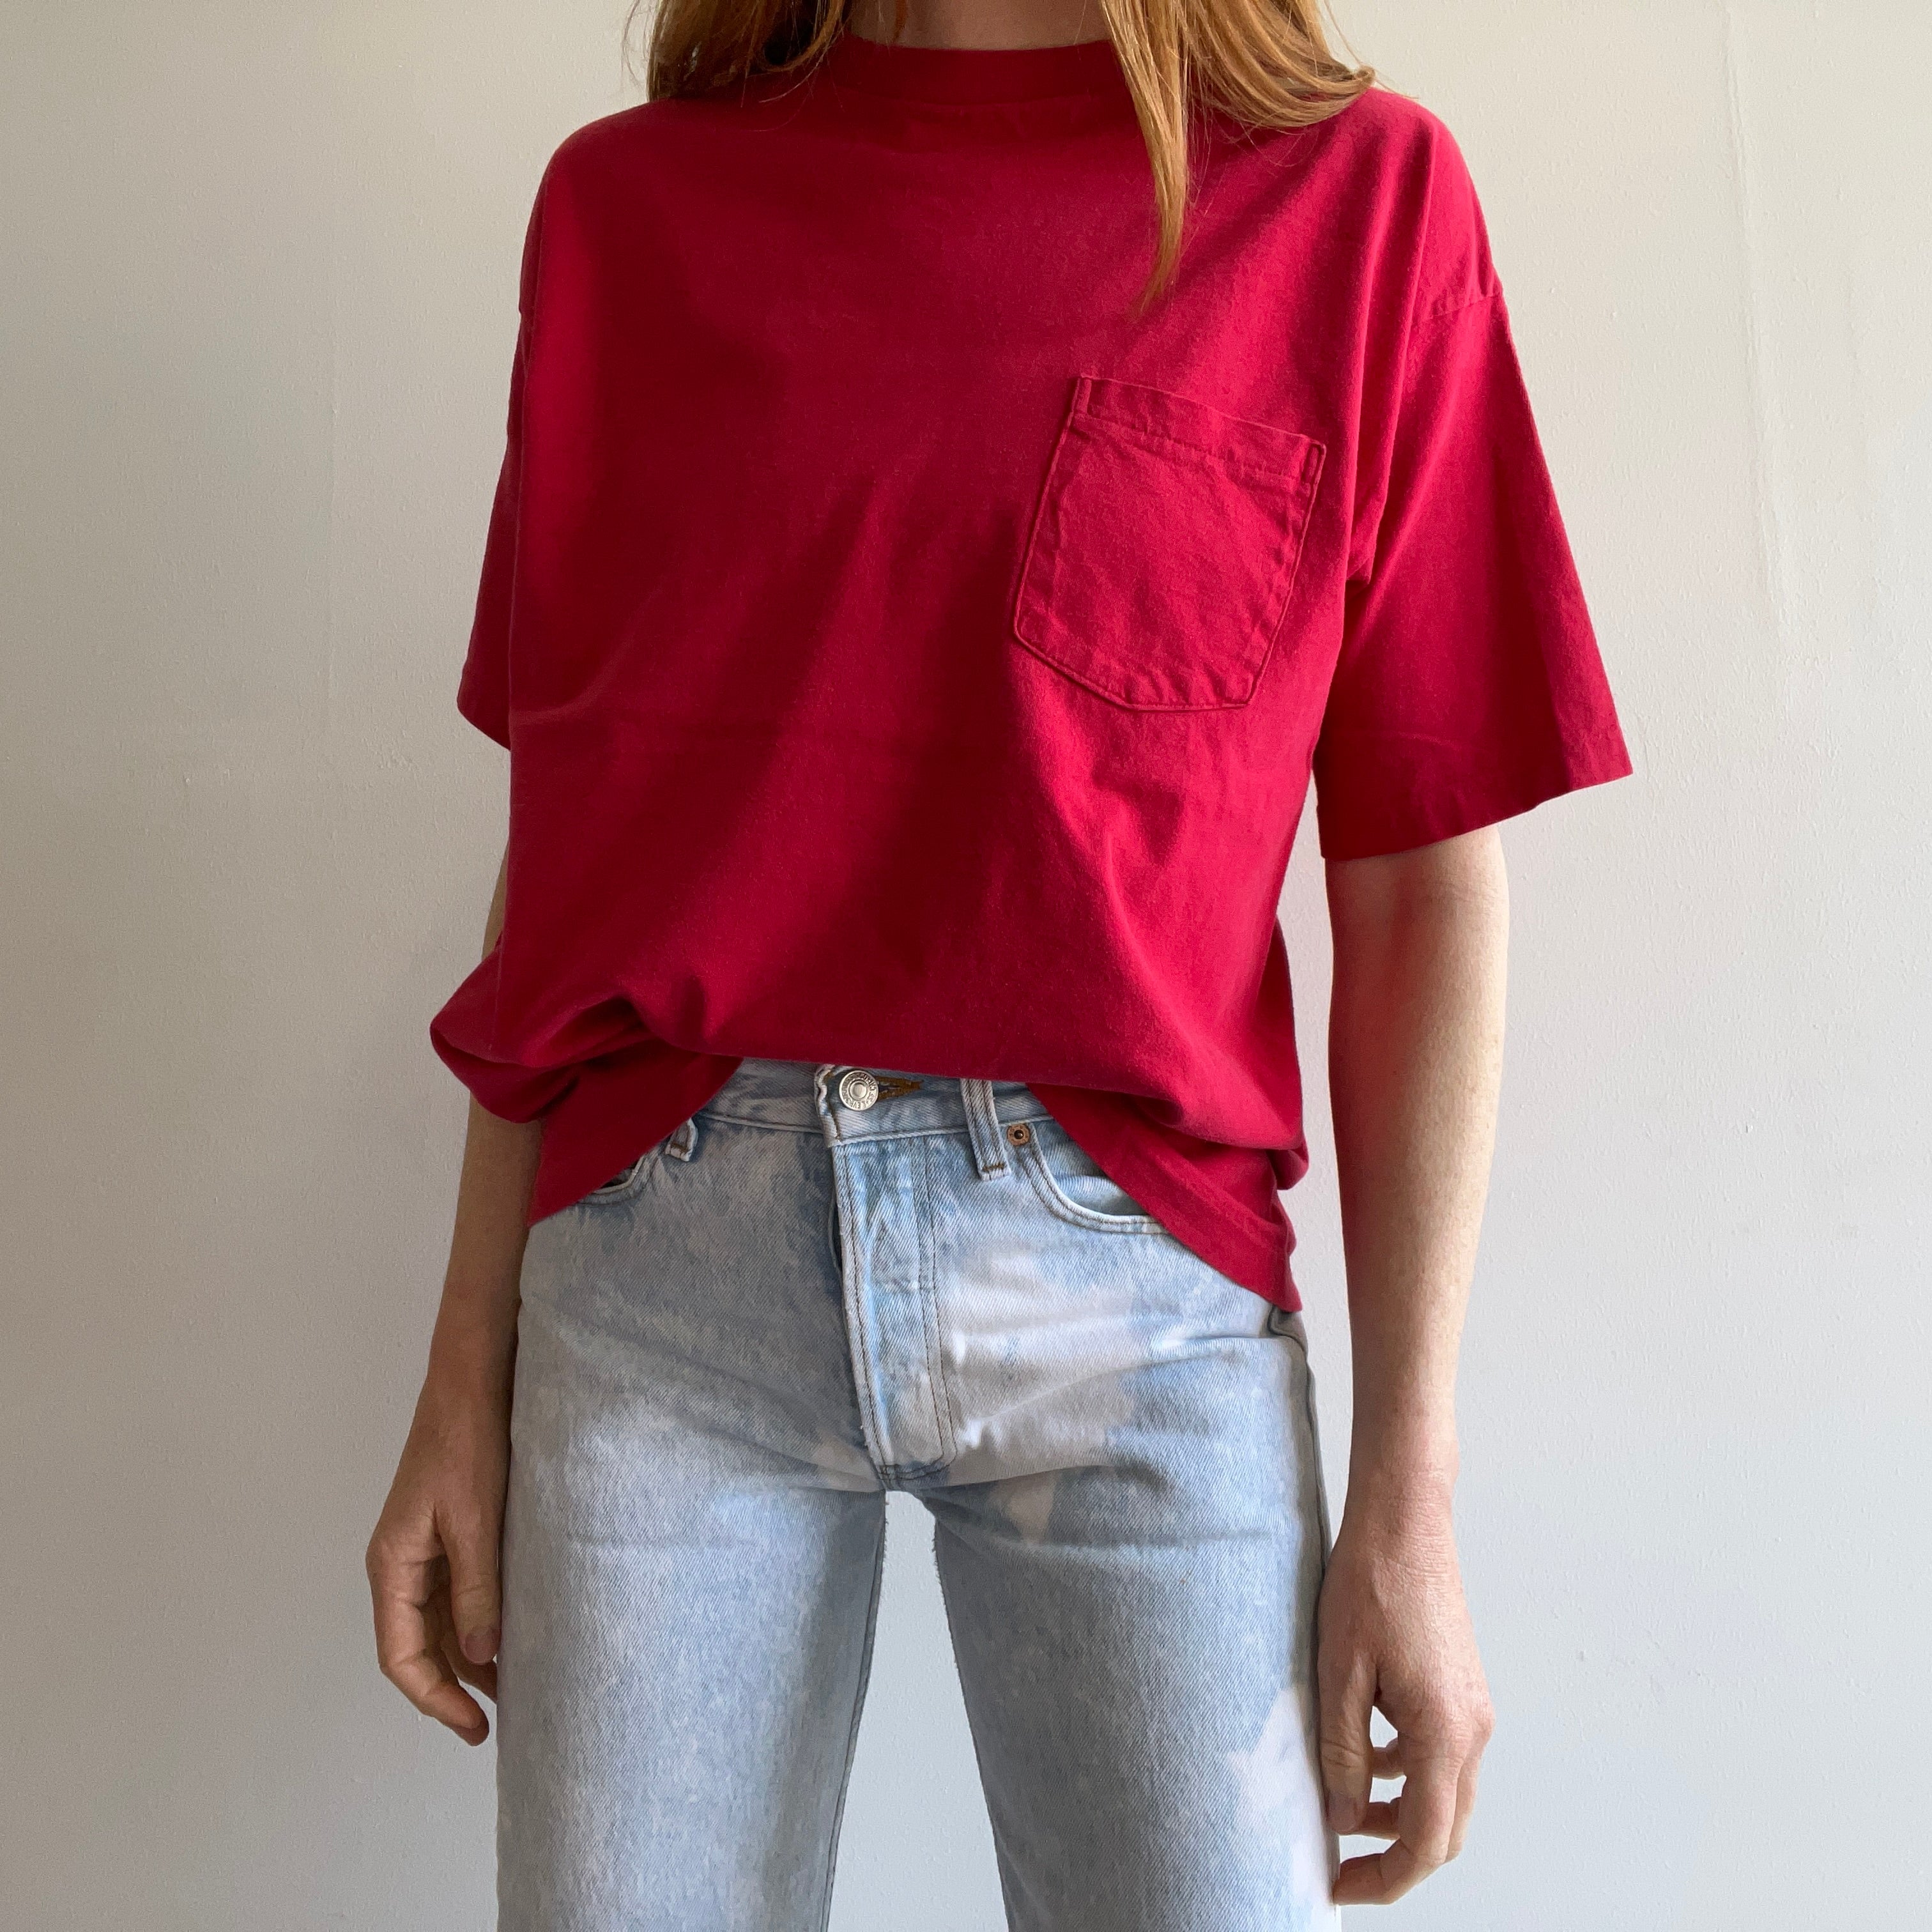 1990s USA Made Gap Red Pocket T-Shirt